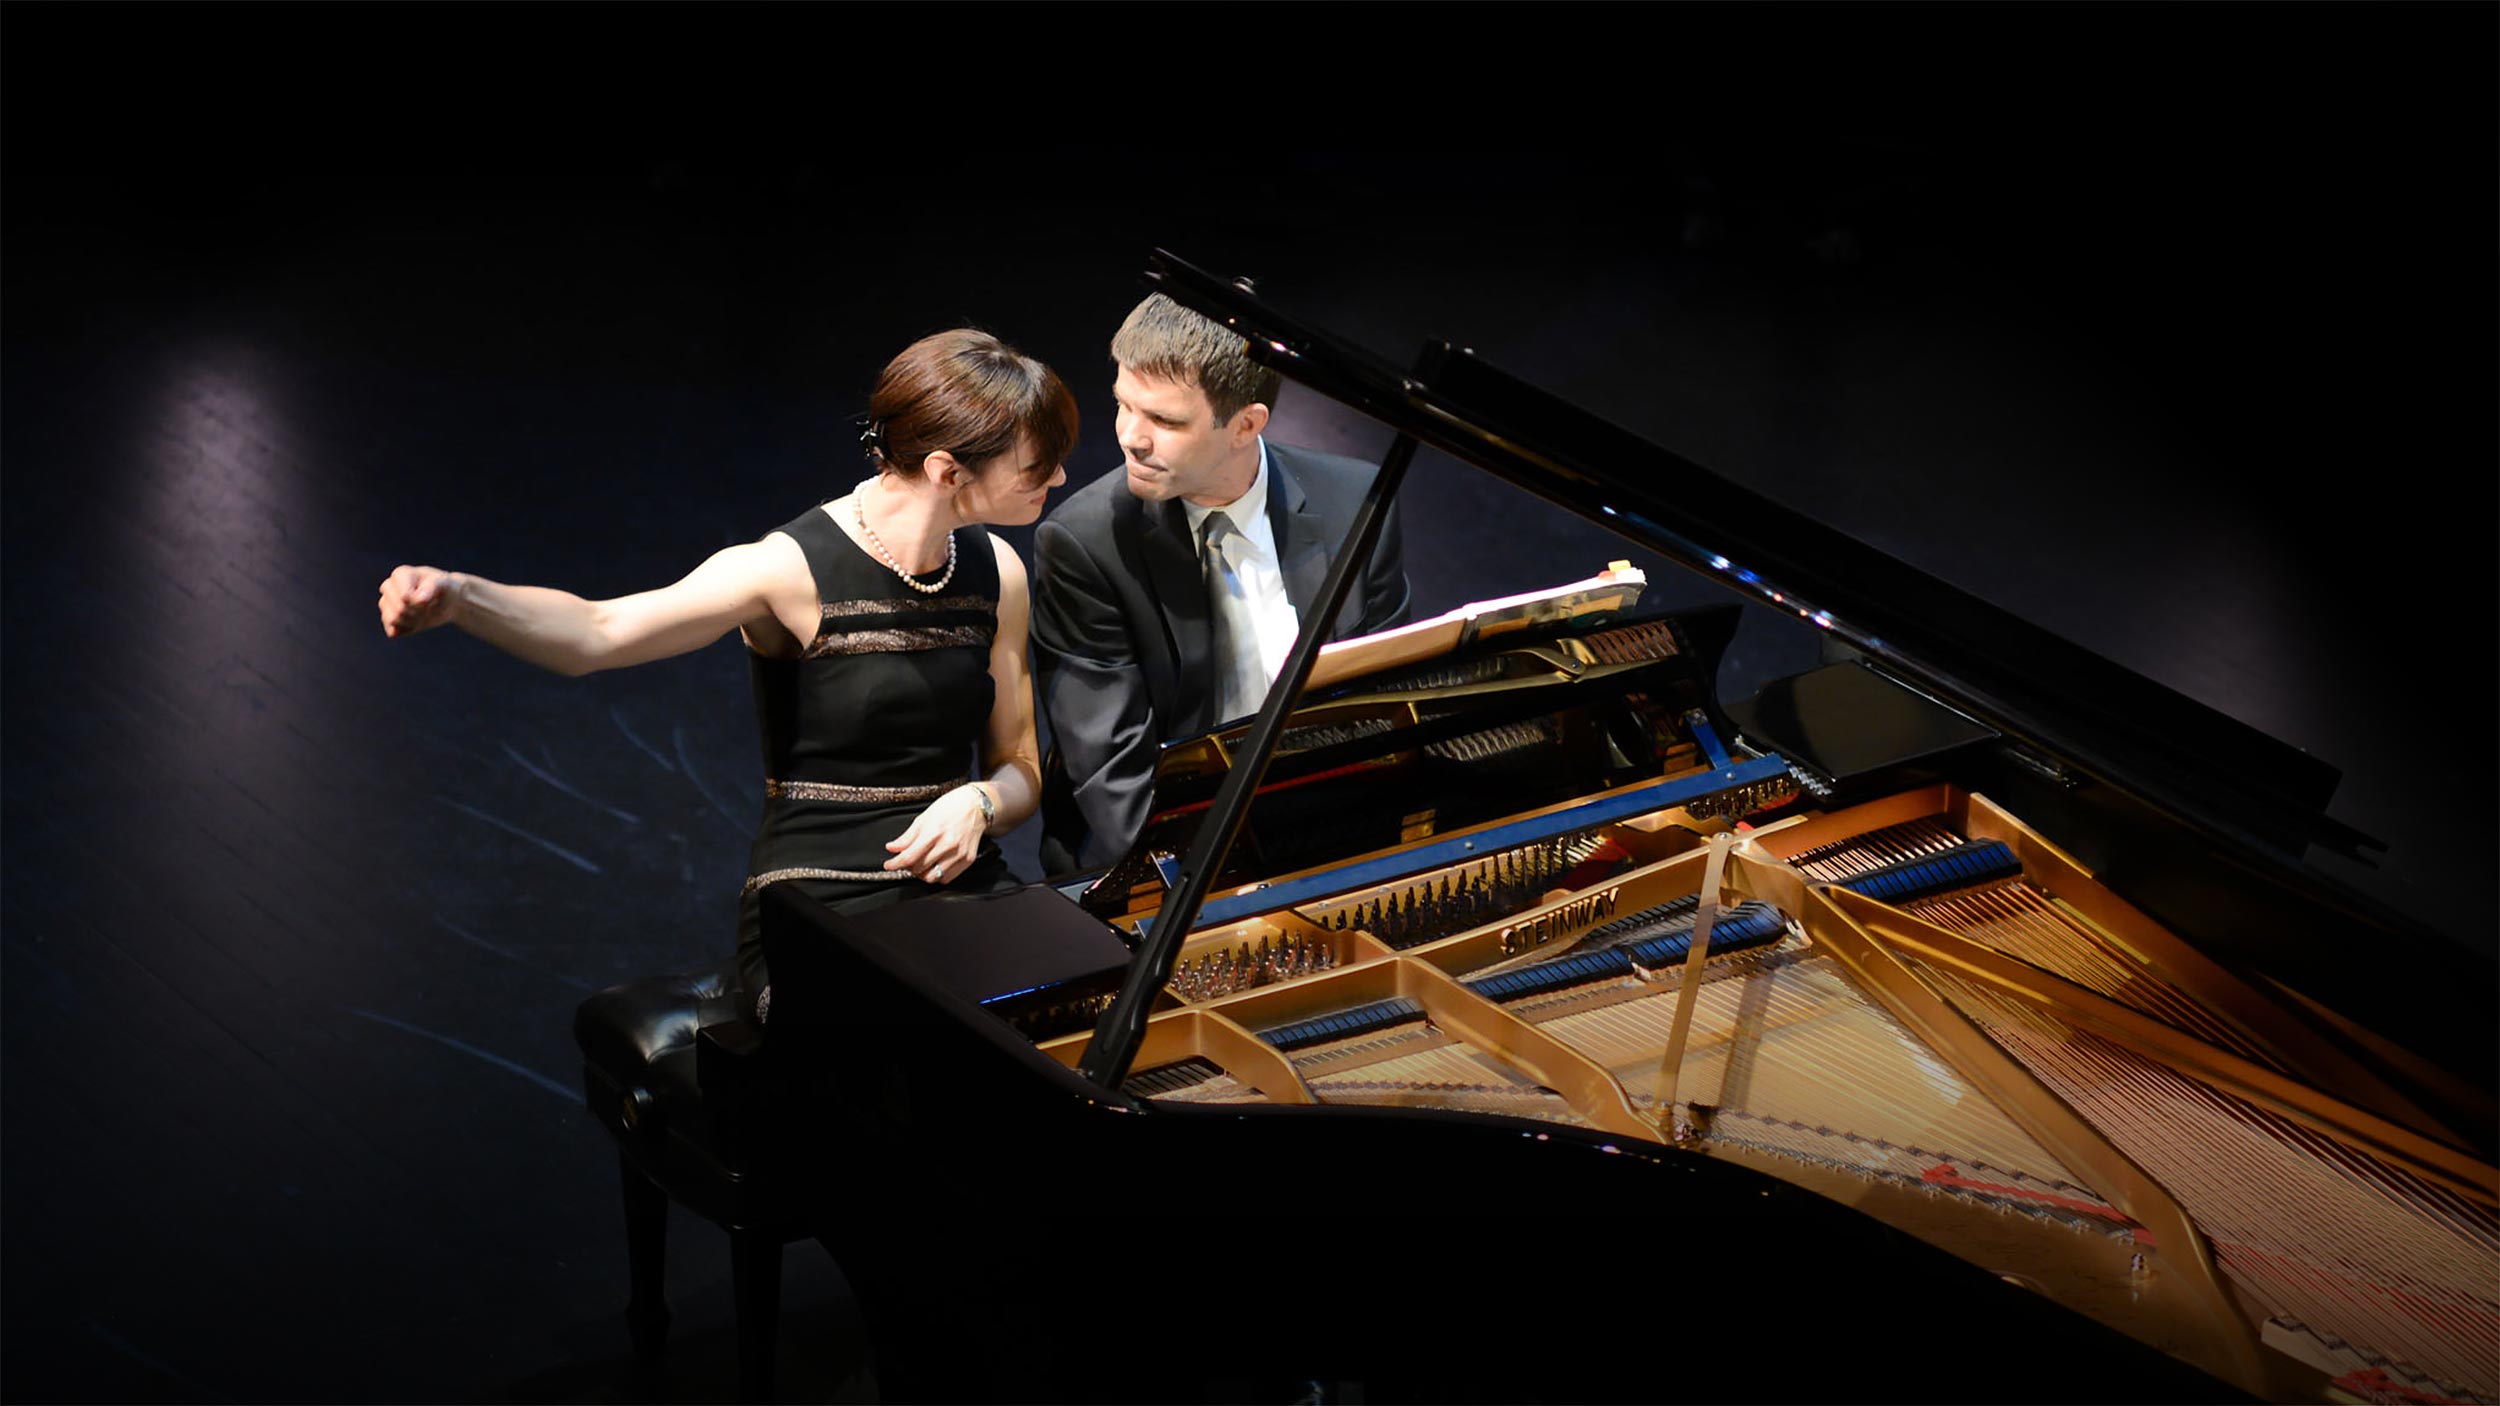 Lomazov Rackers piano duo playing piano